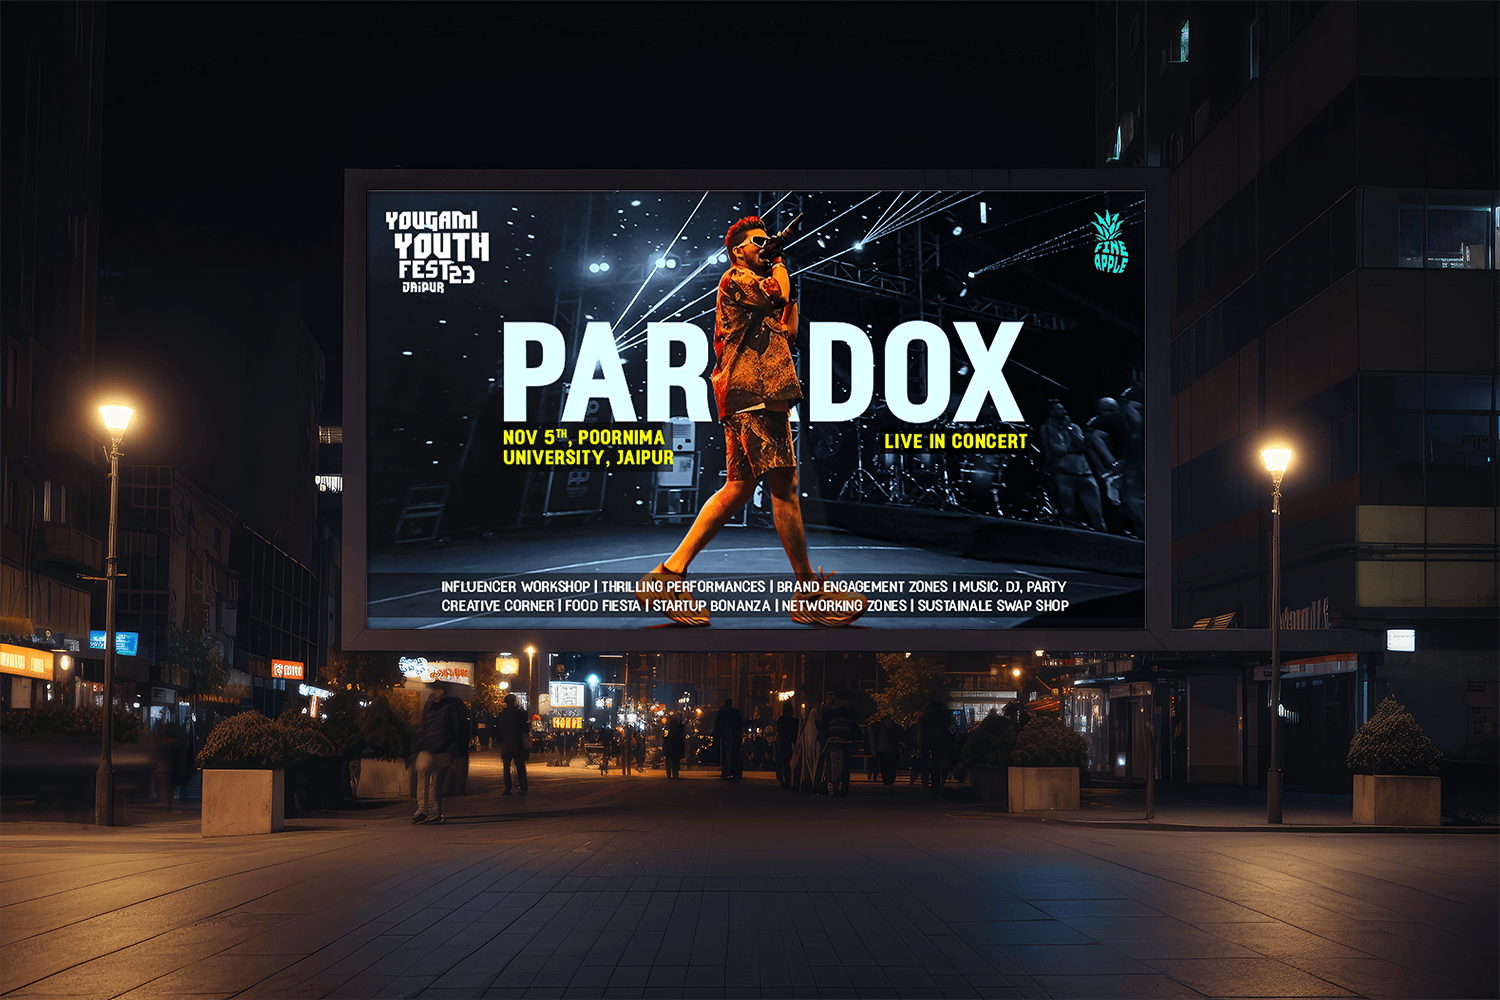 paradox street poster black